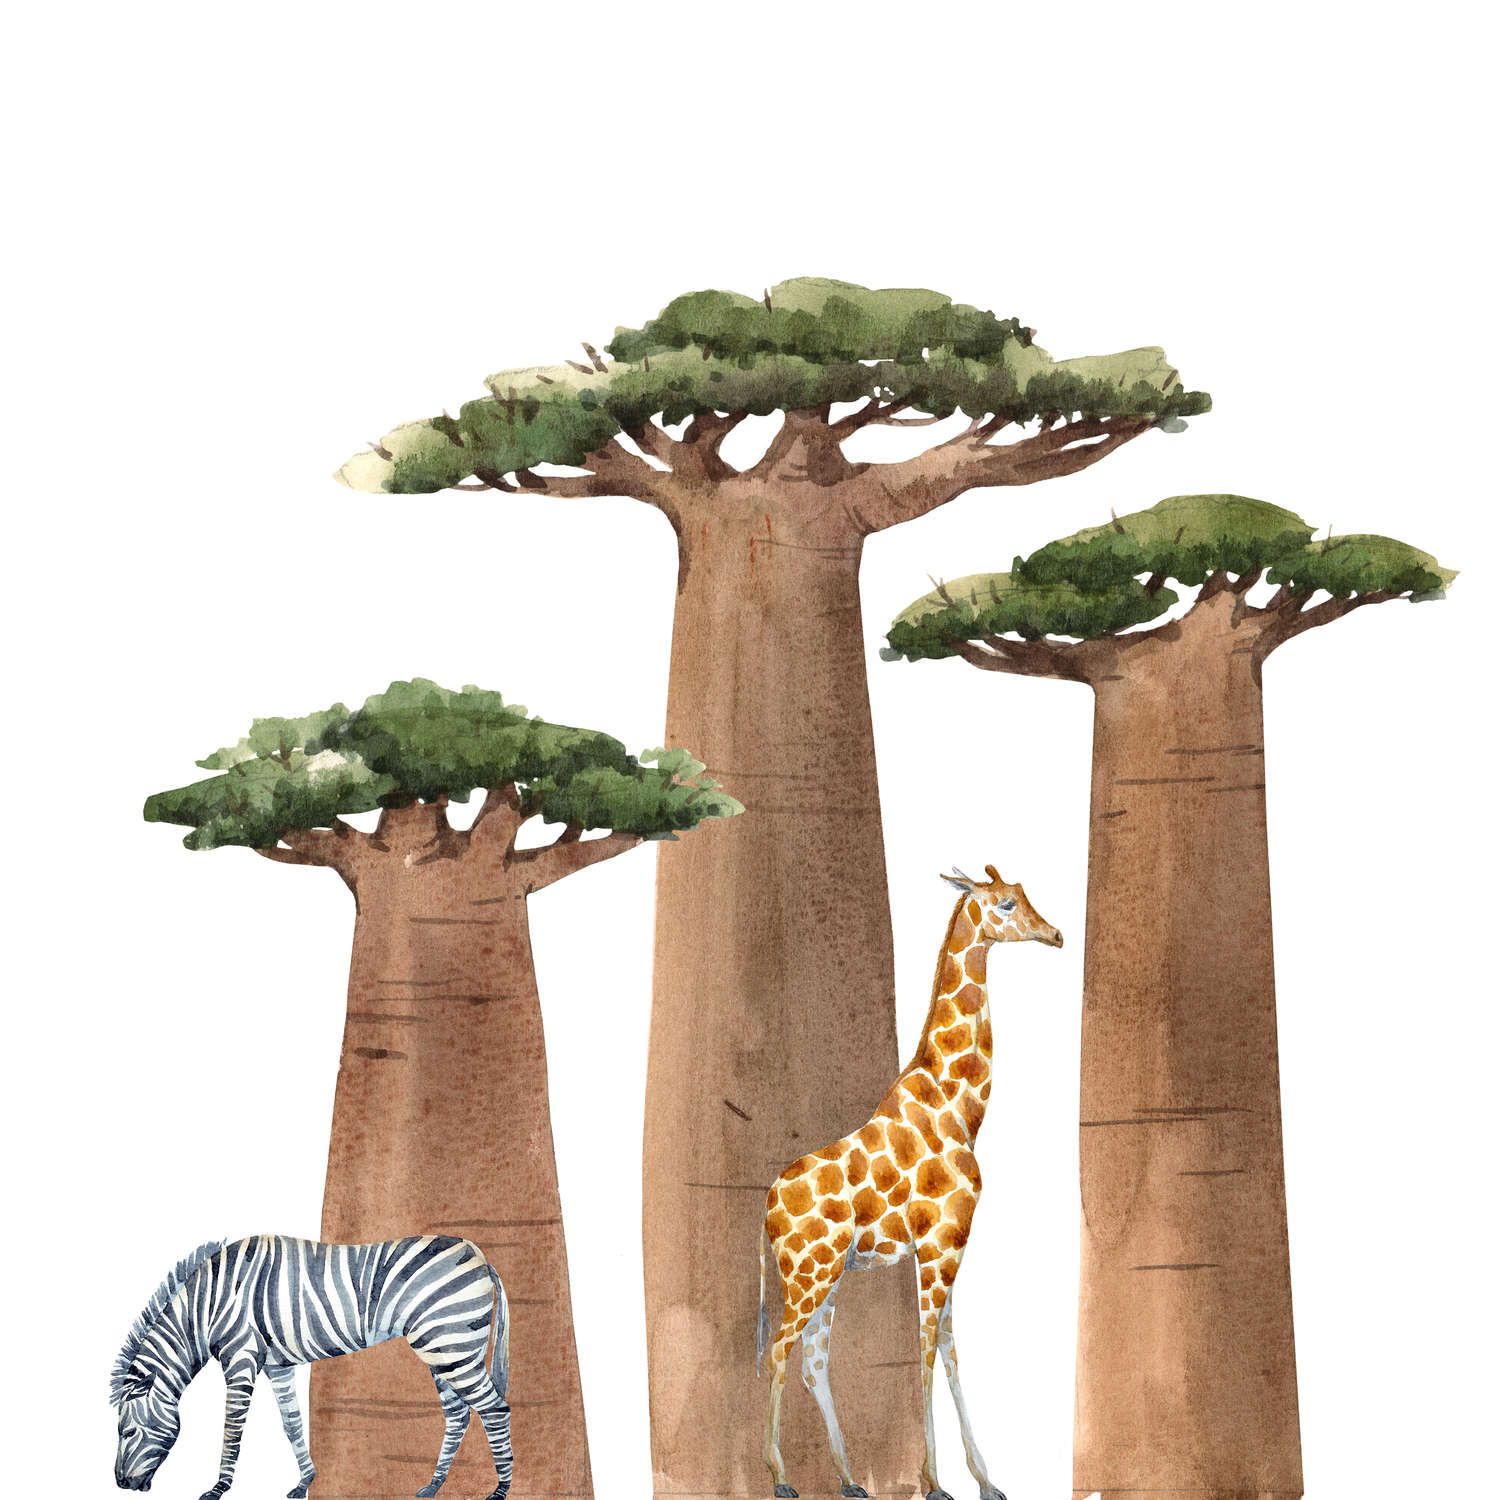             Photo wallpaper Savannah with Giraffe and Zebra - Smooth & pearlescent fleece
        